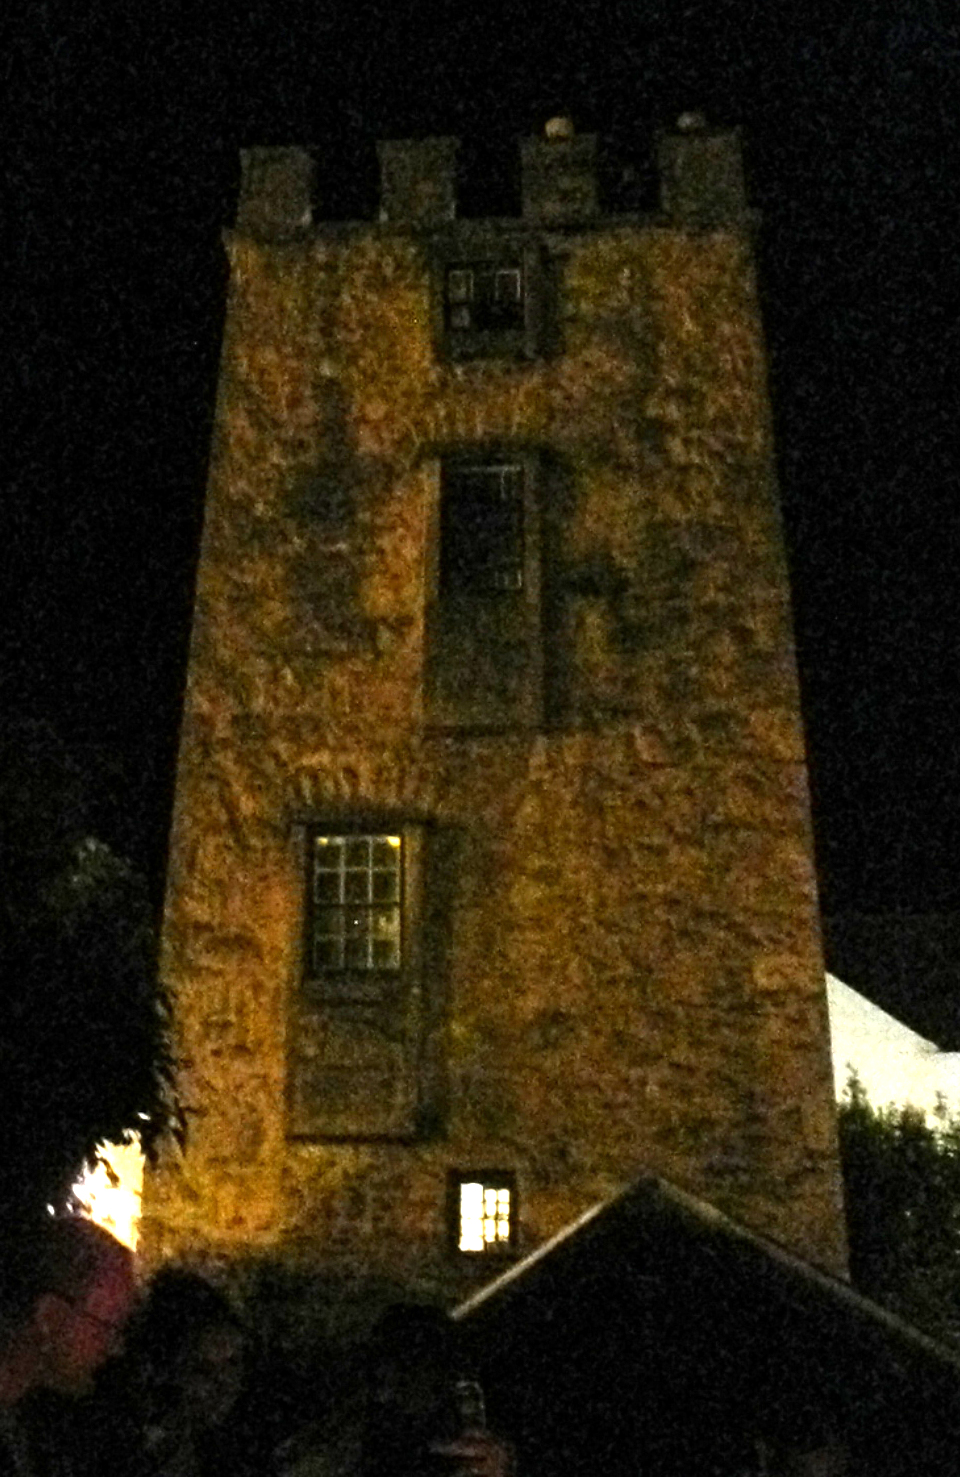  The Curfew Tower by bonfire light